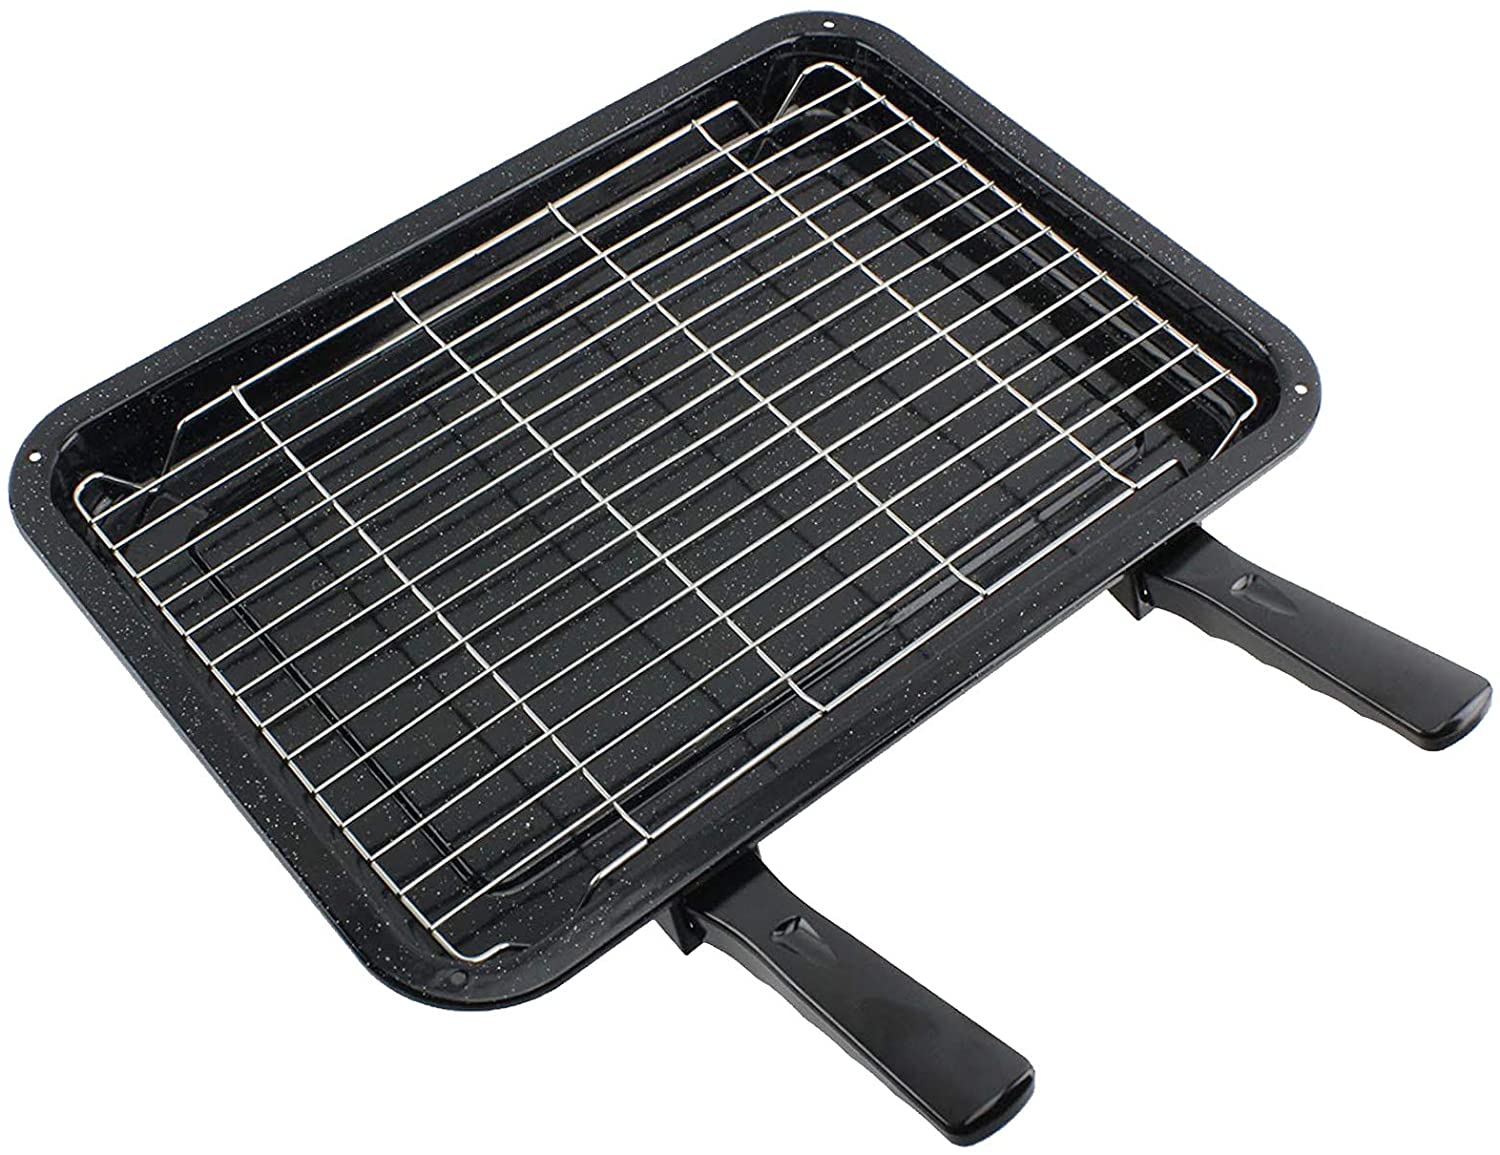 Medium Grill Pan, Rack & Dual Detachable Handles with Adjustable Shelf for CREDA Oven Cookers